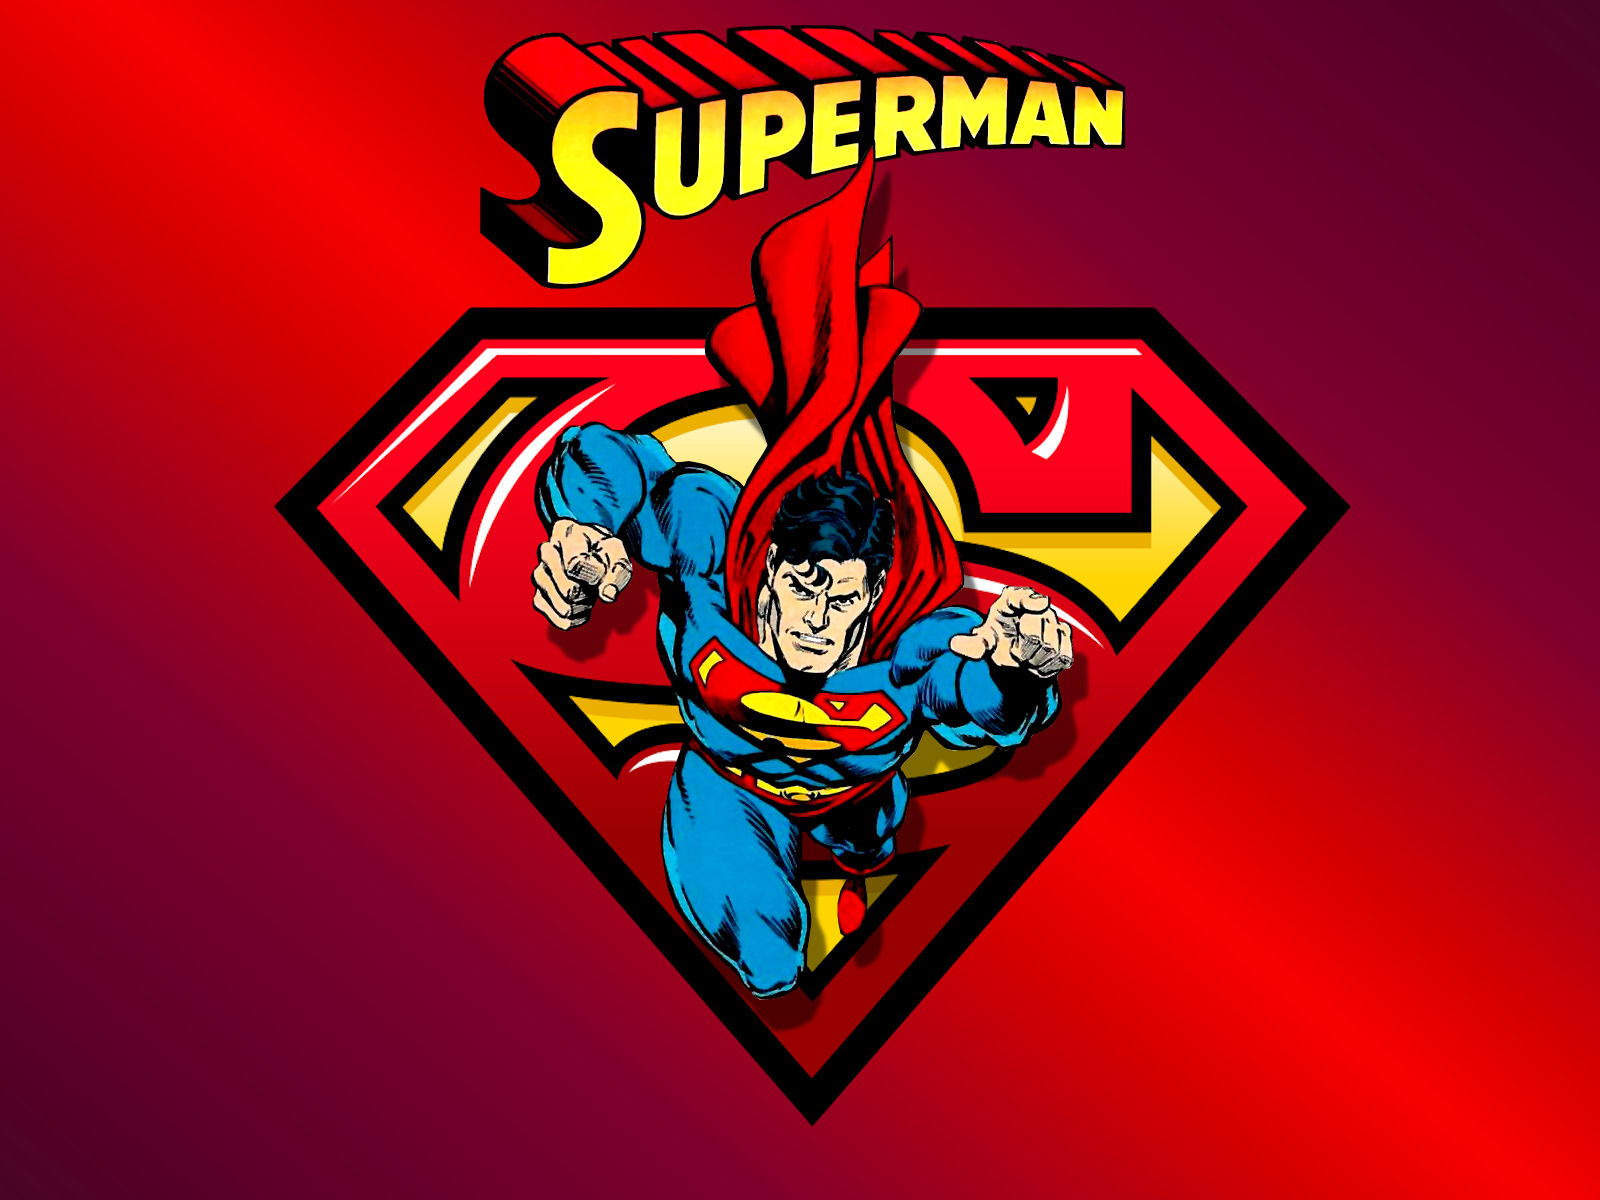 Superman Wallpaper HD - Home Designs